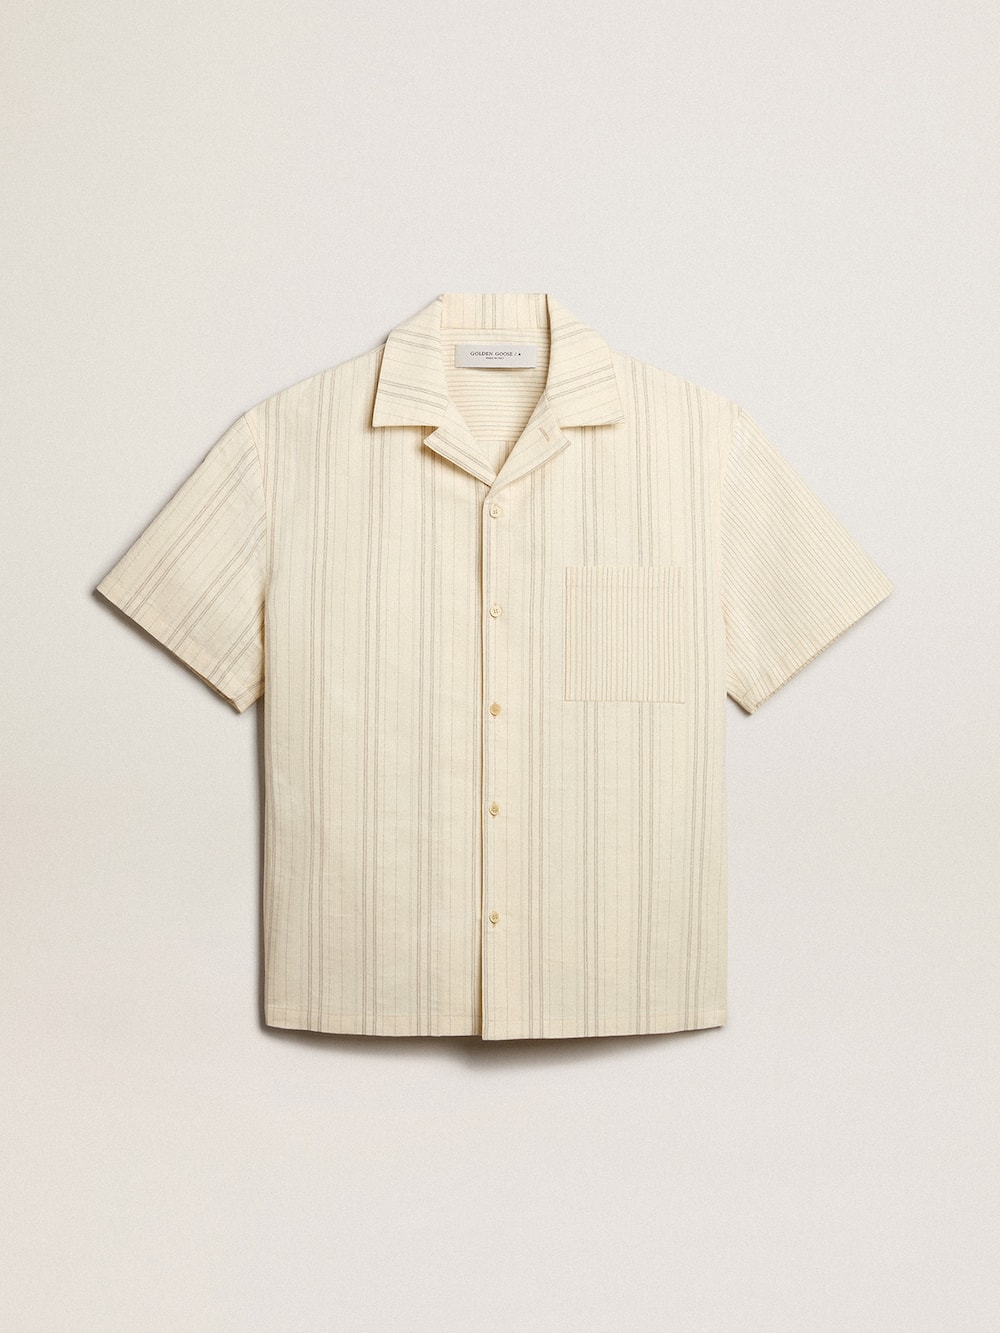 Golden Goose - Men's short-sleeved shirt in ecru-colored cotton  in 